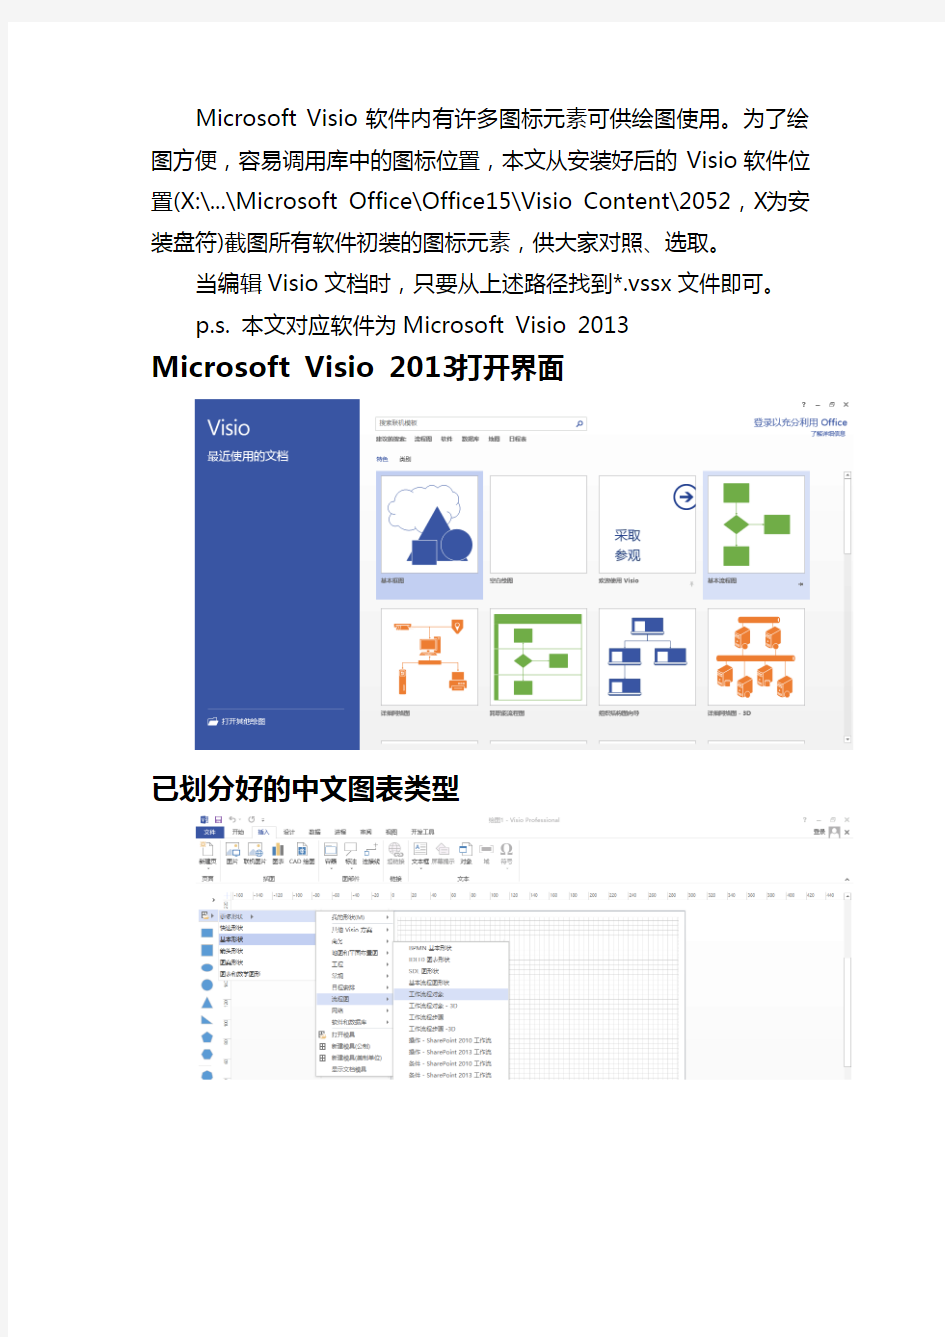 Microsoft Visio 2013系统自带图标元素文件对照图